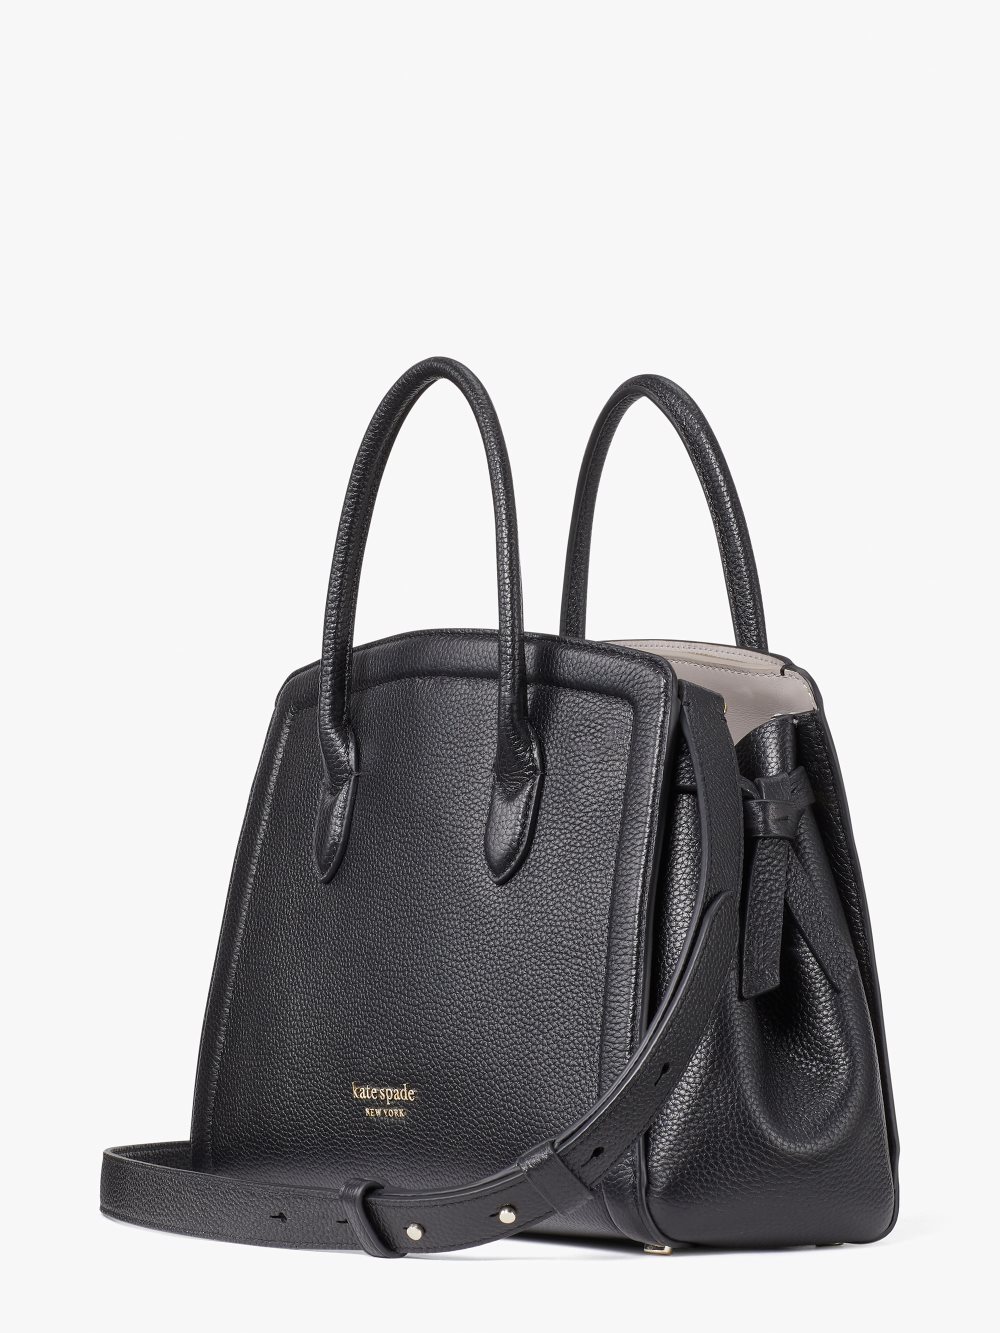 Women's black knott medium satchel | Kate Spade